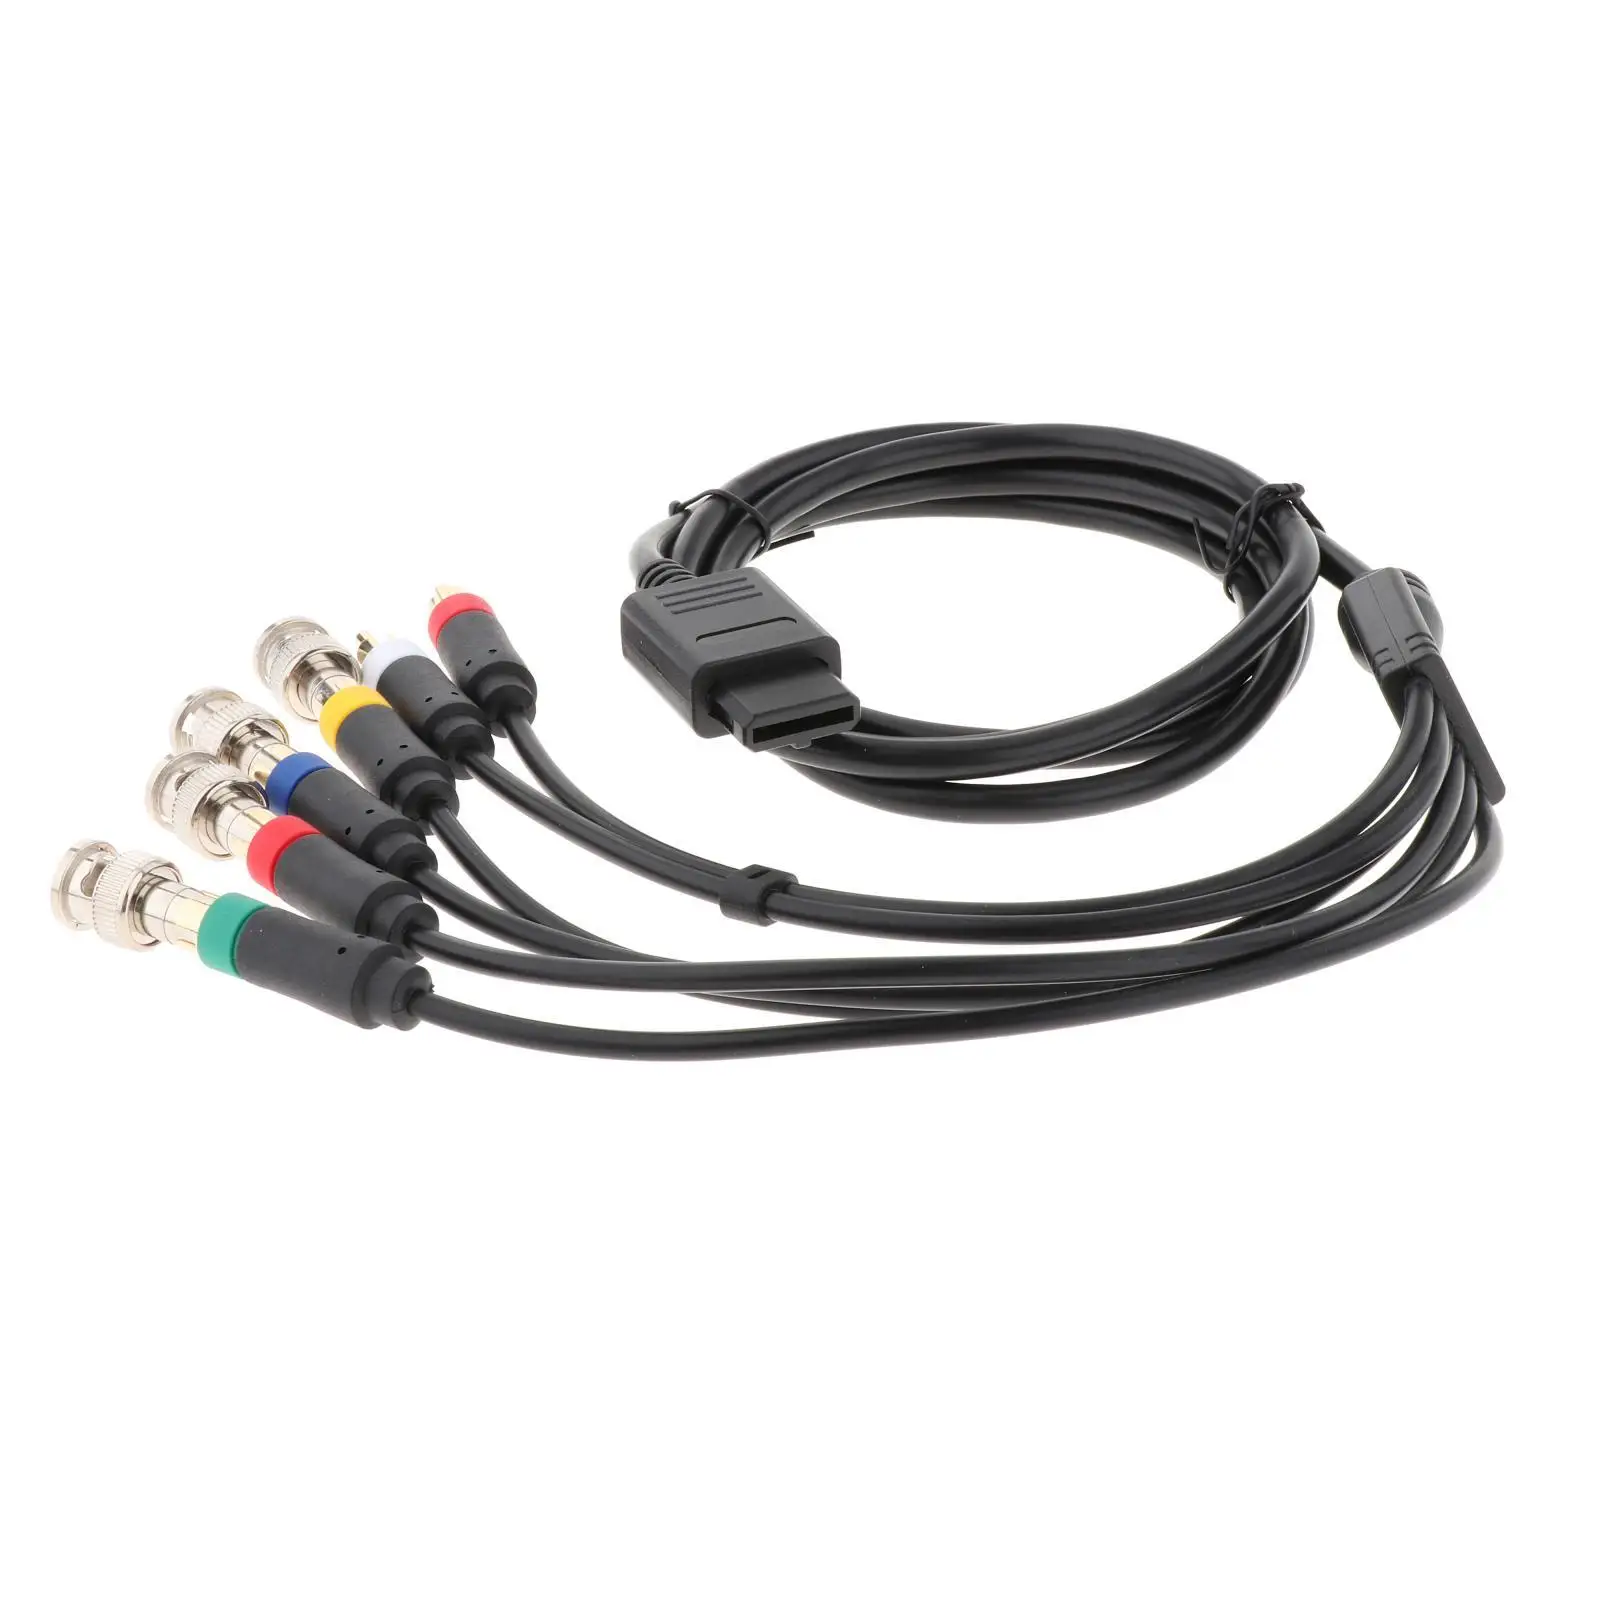 AV Composite Retro Cable RCA TV Audio Video Standard Cords Connector for Nintendo 64 Sfc